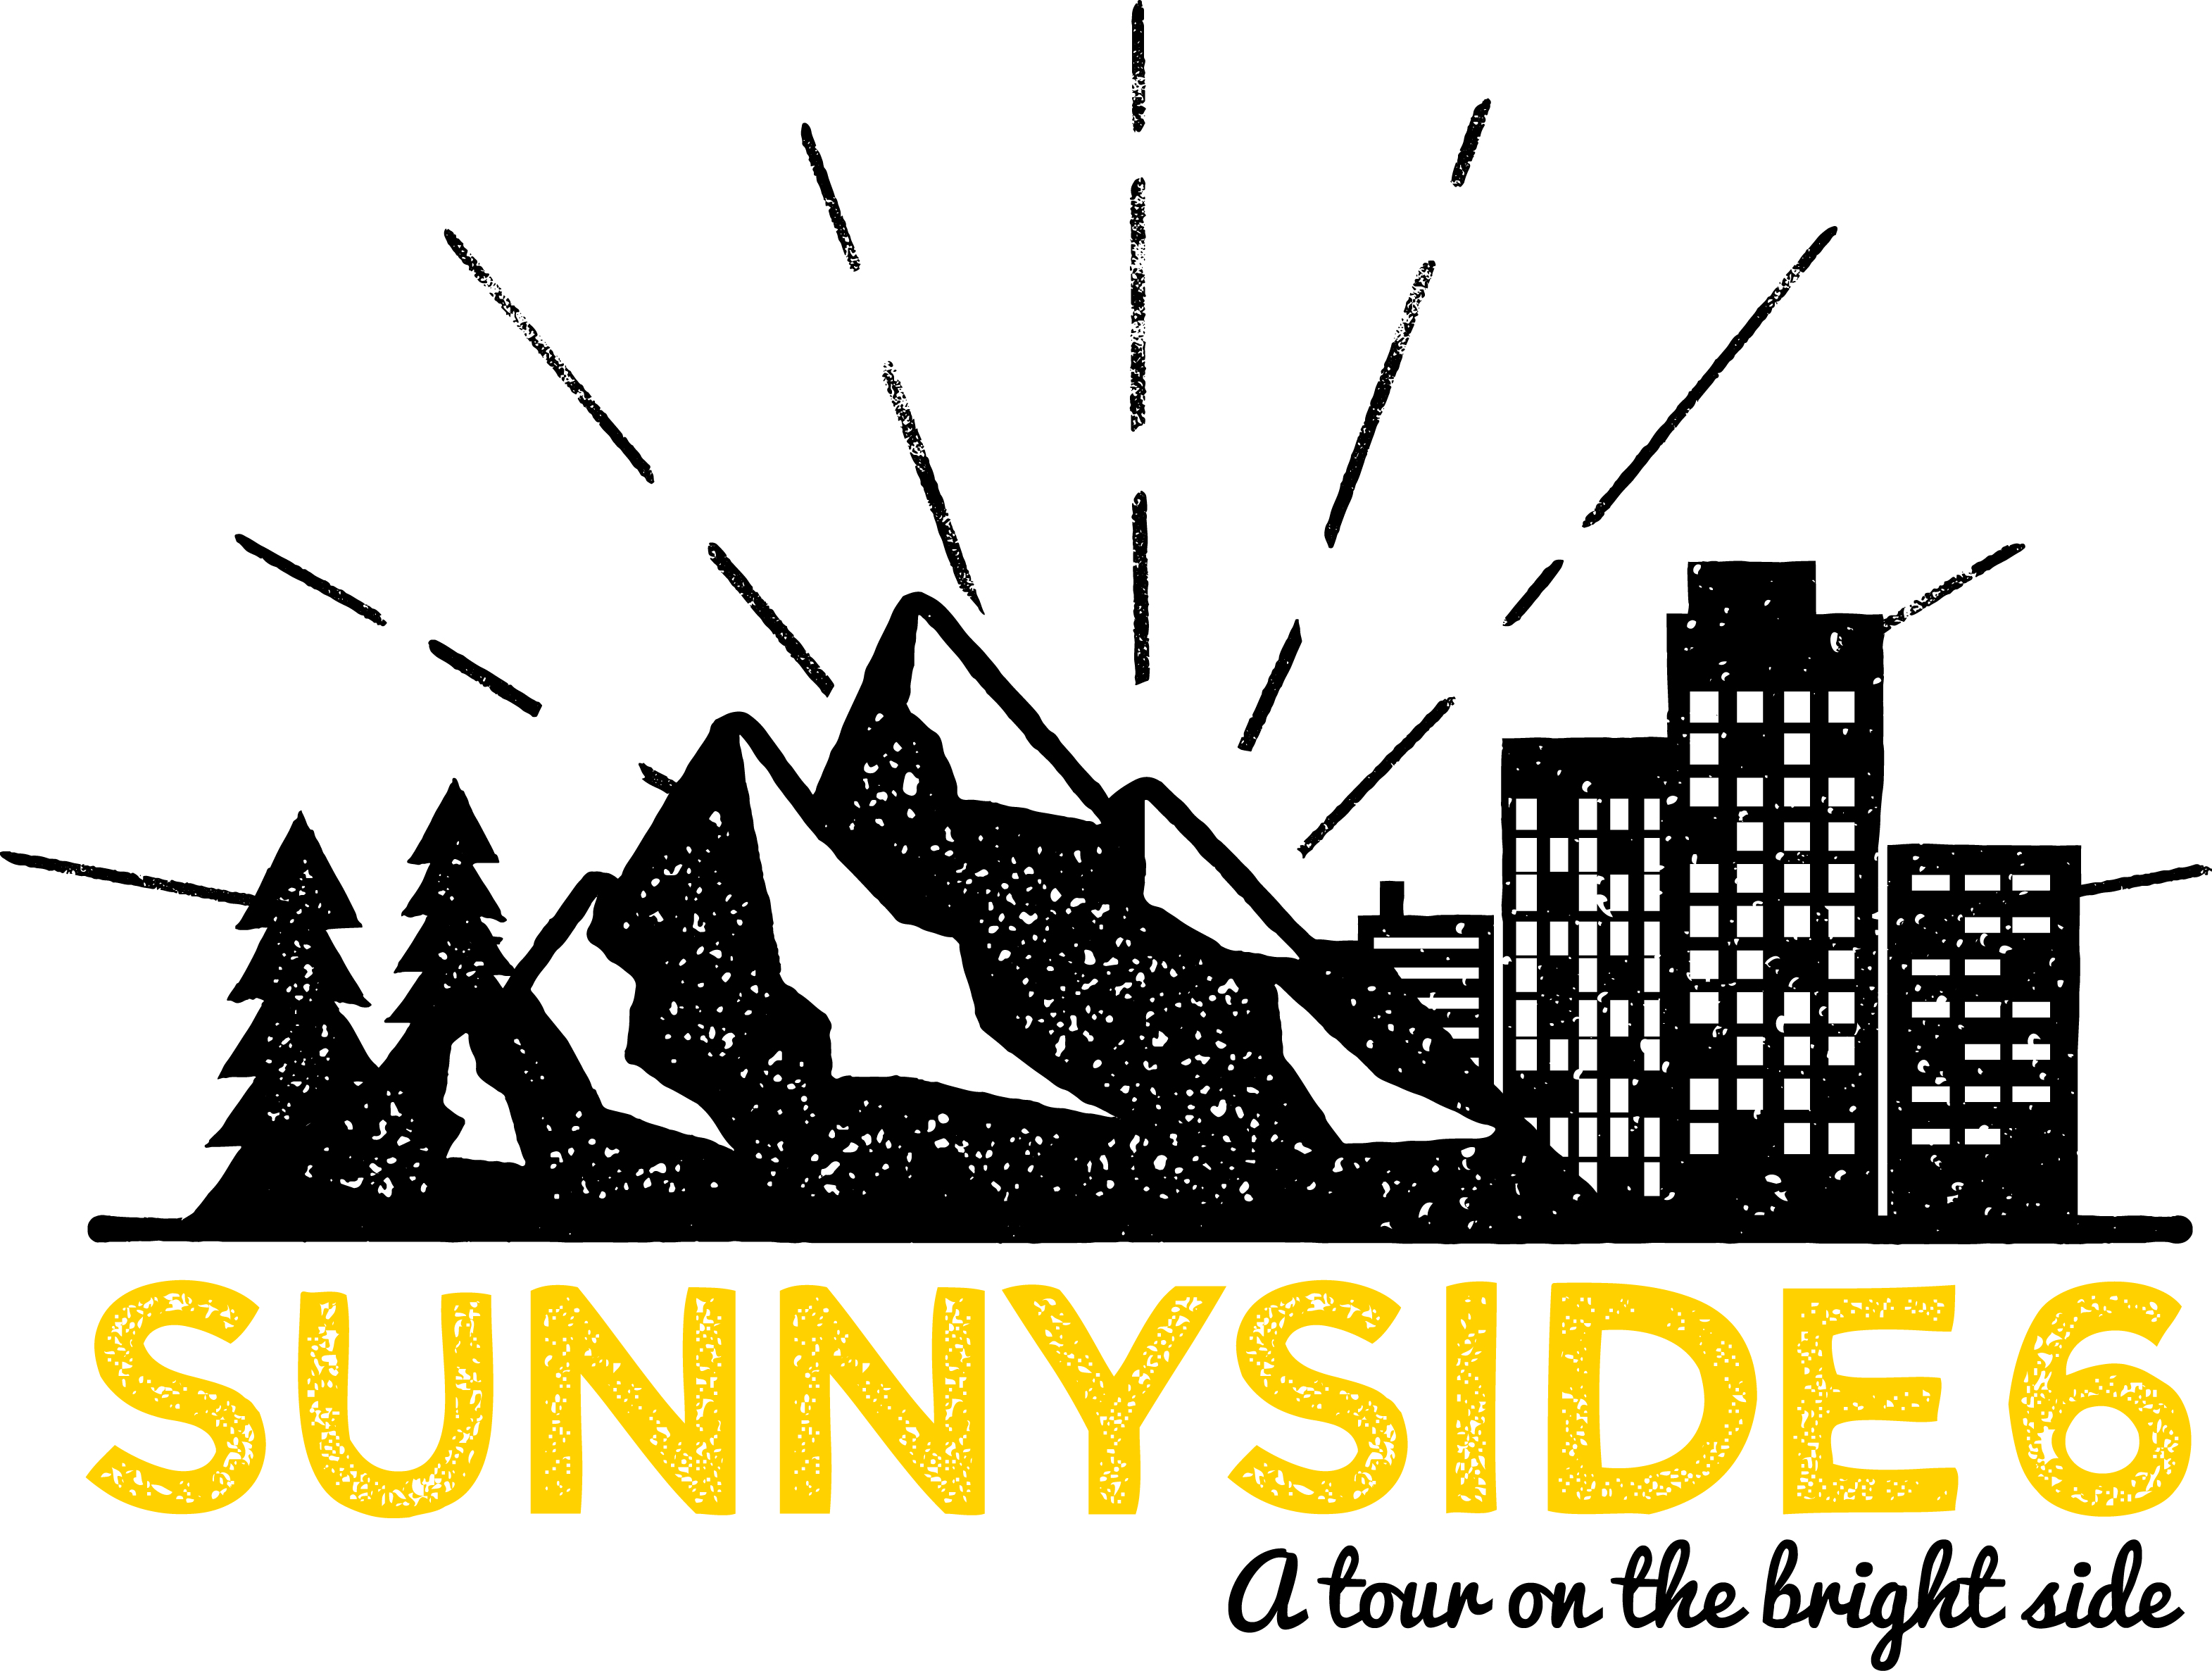 Sunnyside6